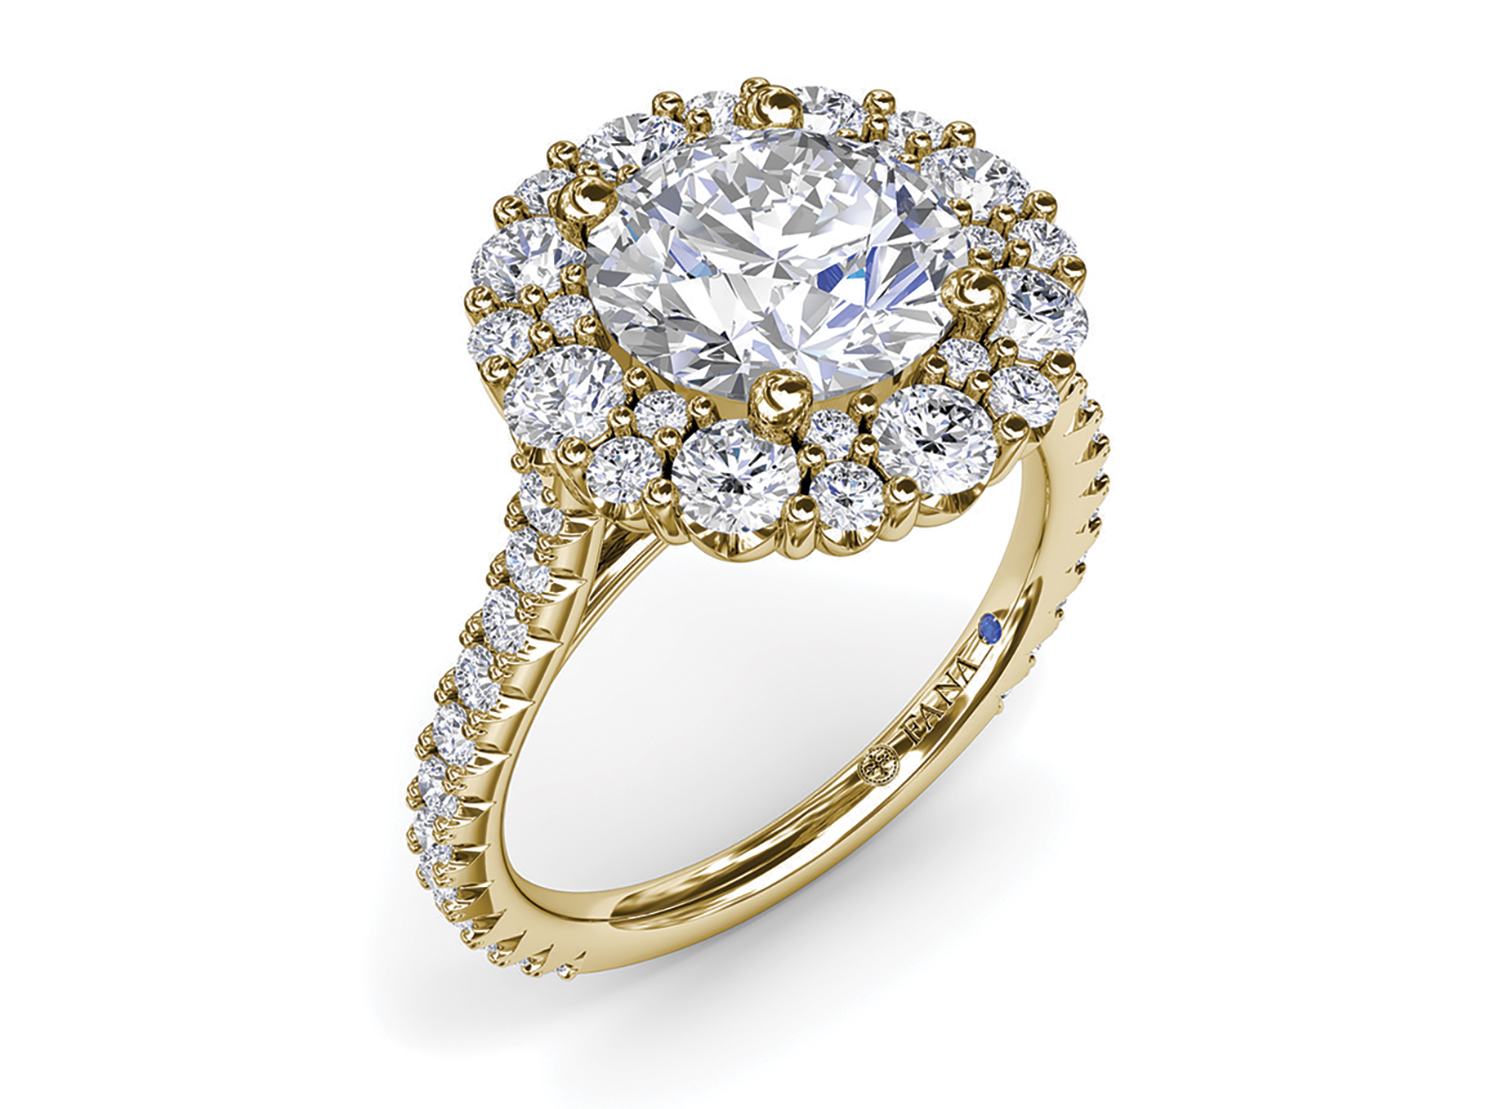 INSTORE Design Awards 2023 – Engagement/Wedding Jewelry Over $5,000